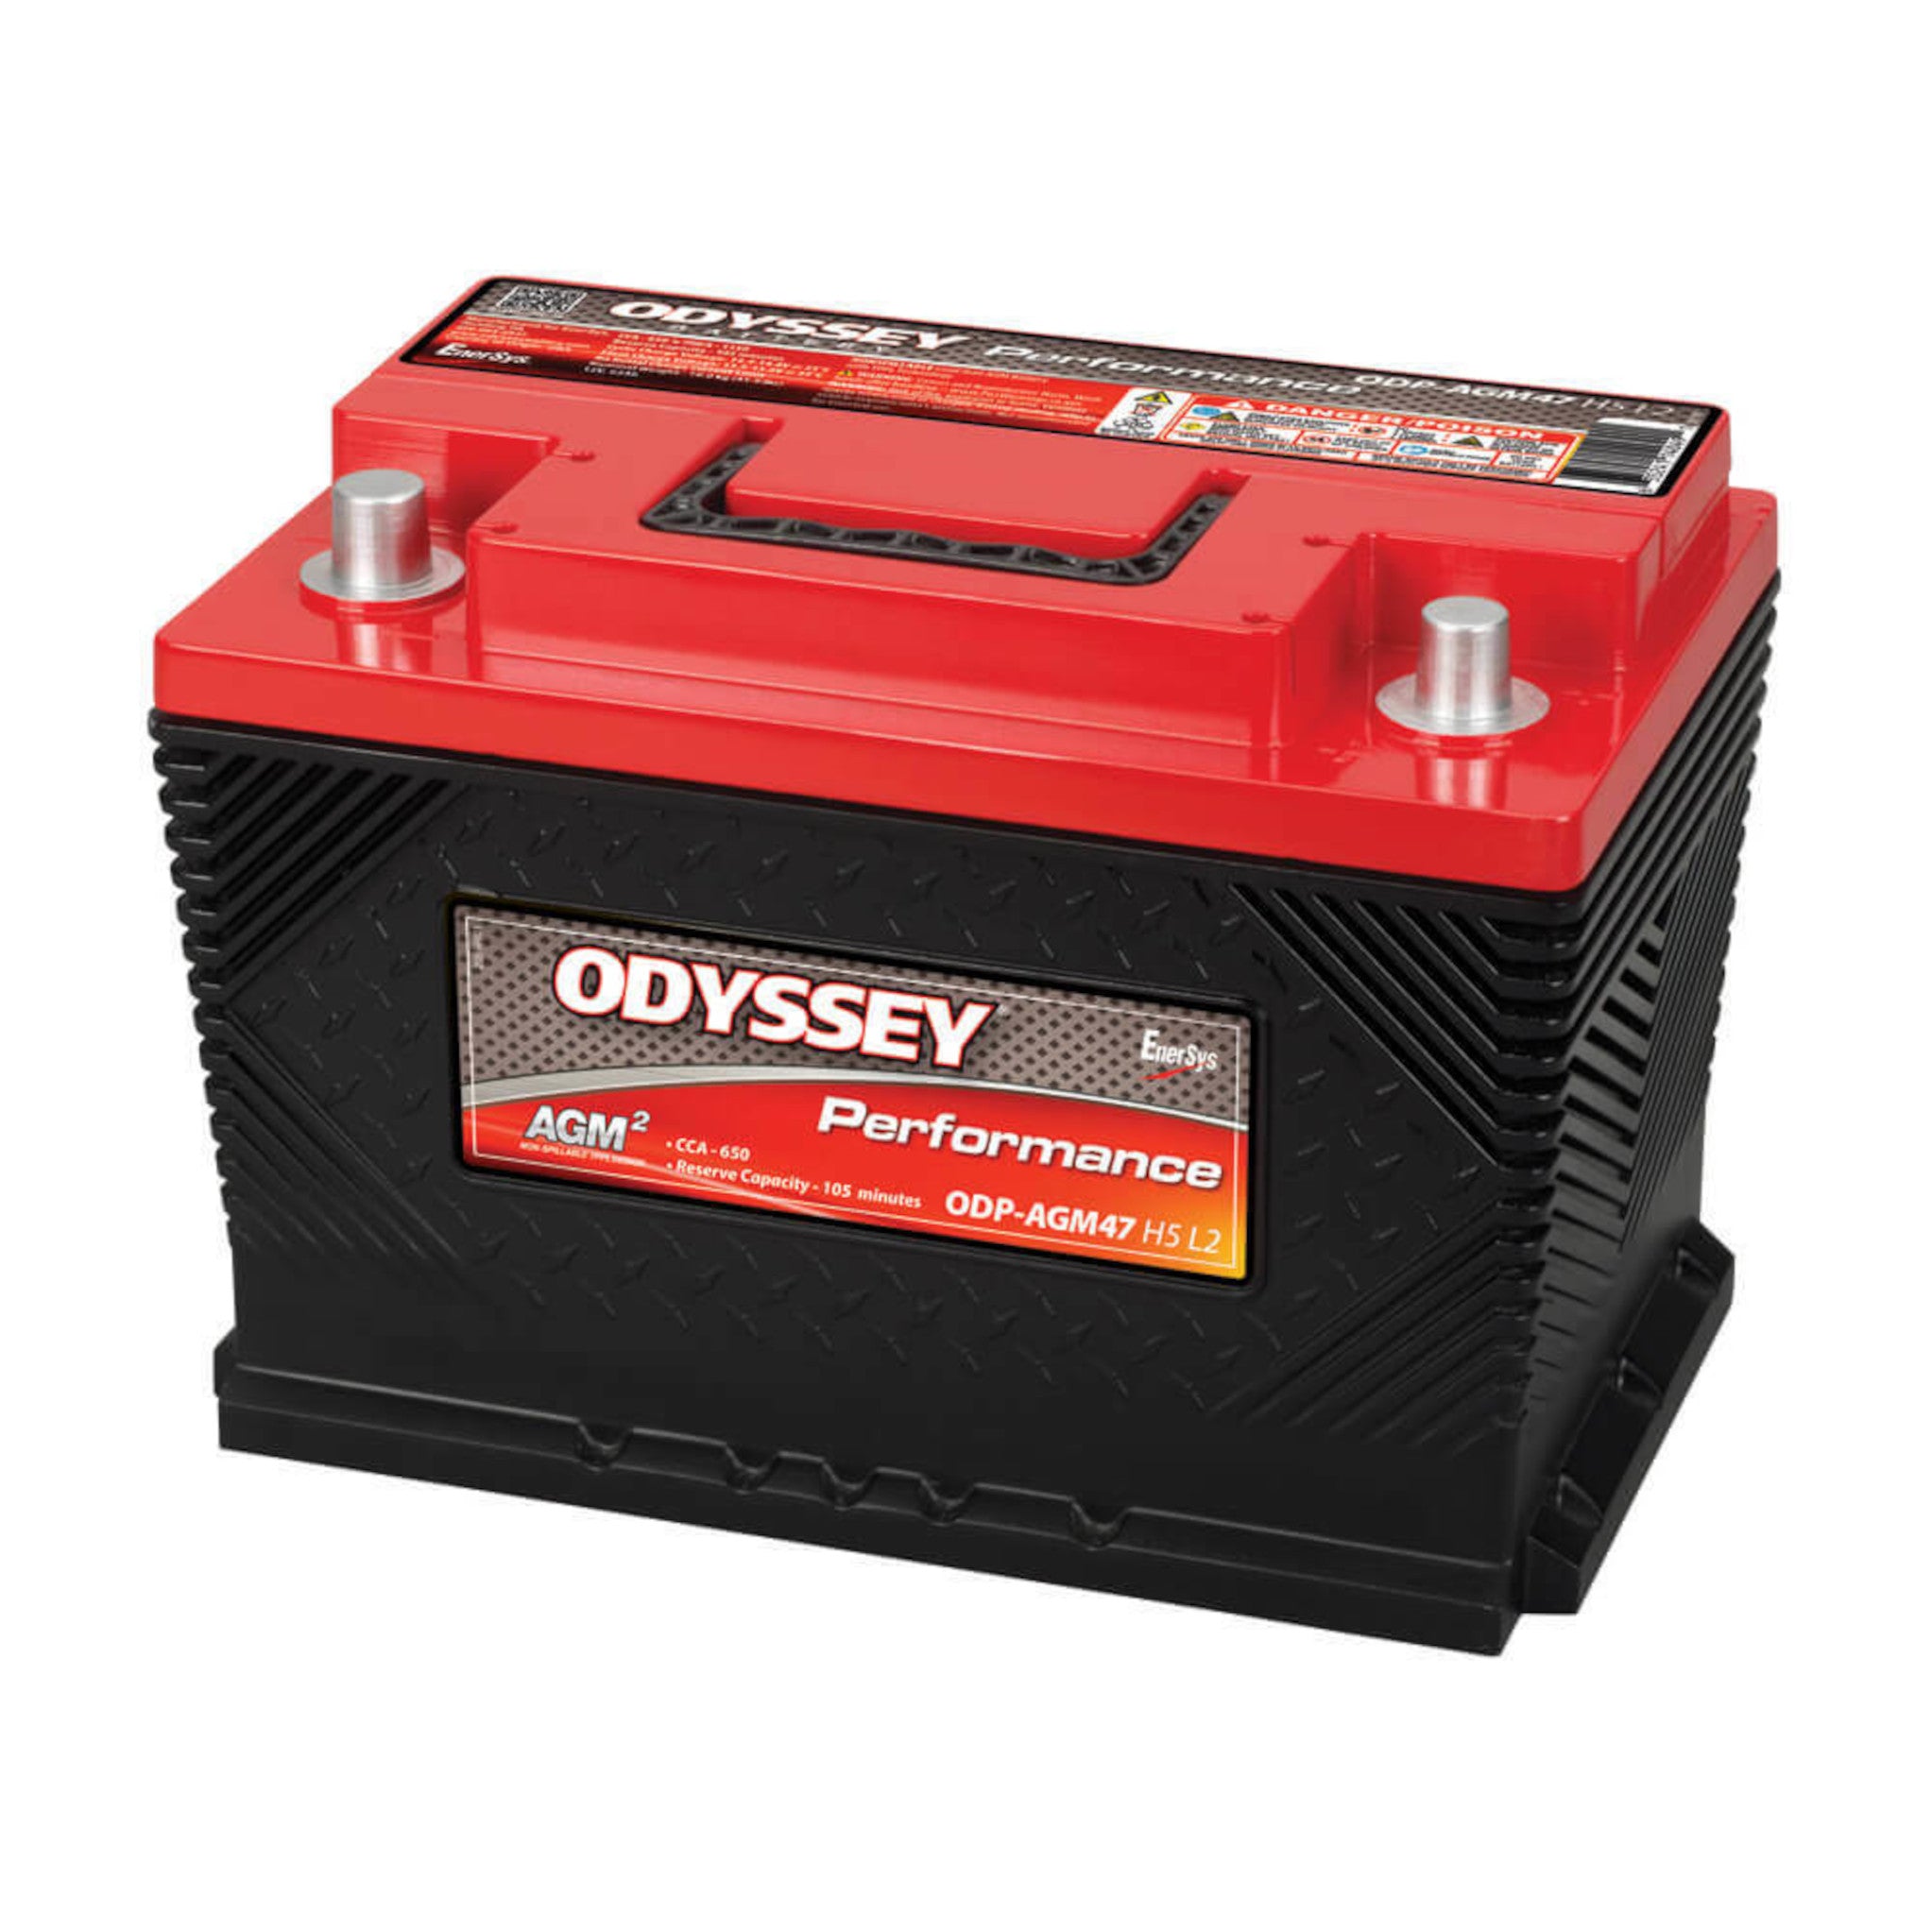 Odyssey ODP-AGM47 H5 L2 12V Group 47 AGM Truck Battery